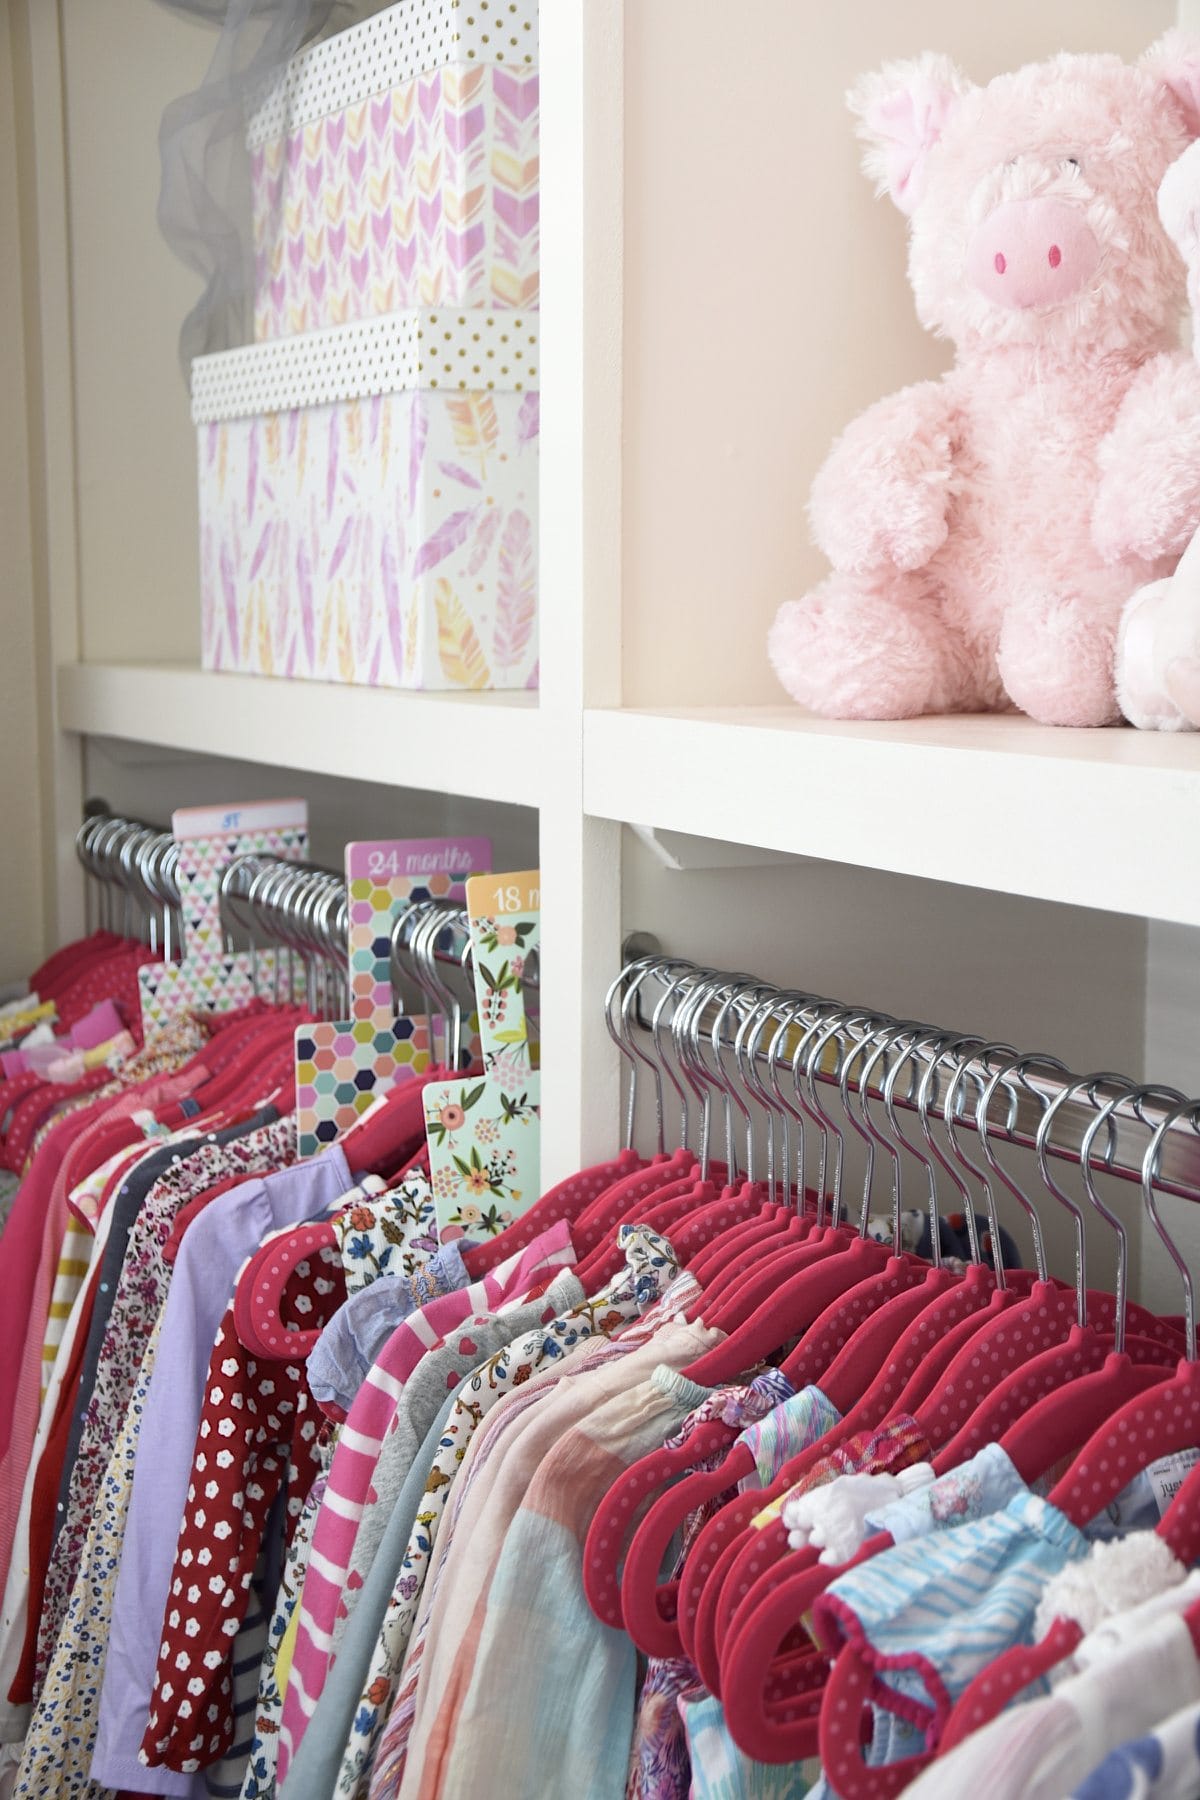 Organized kid closet